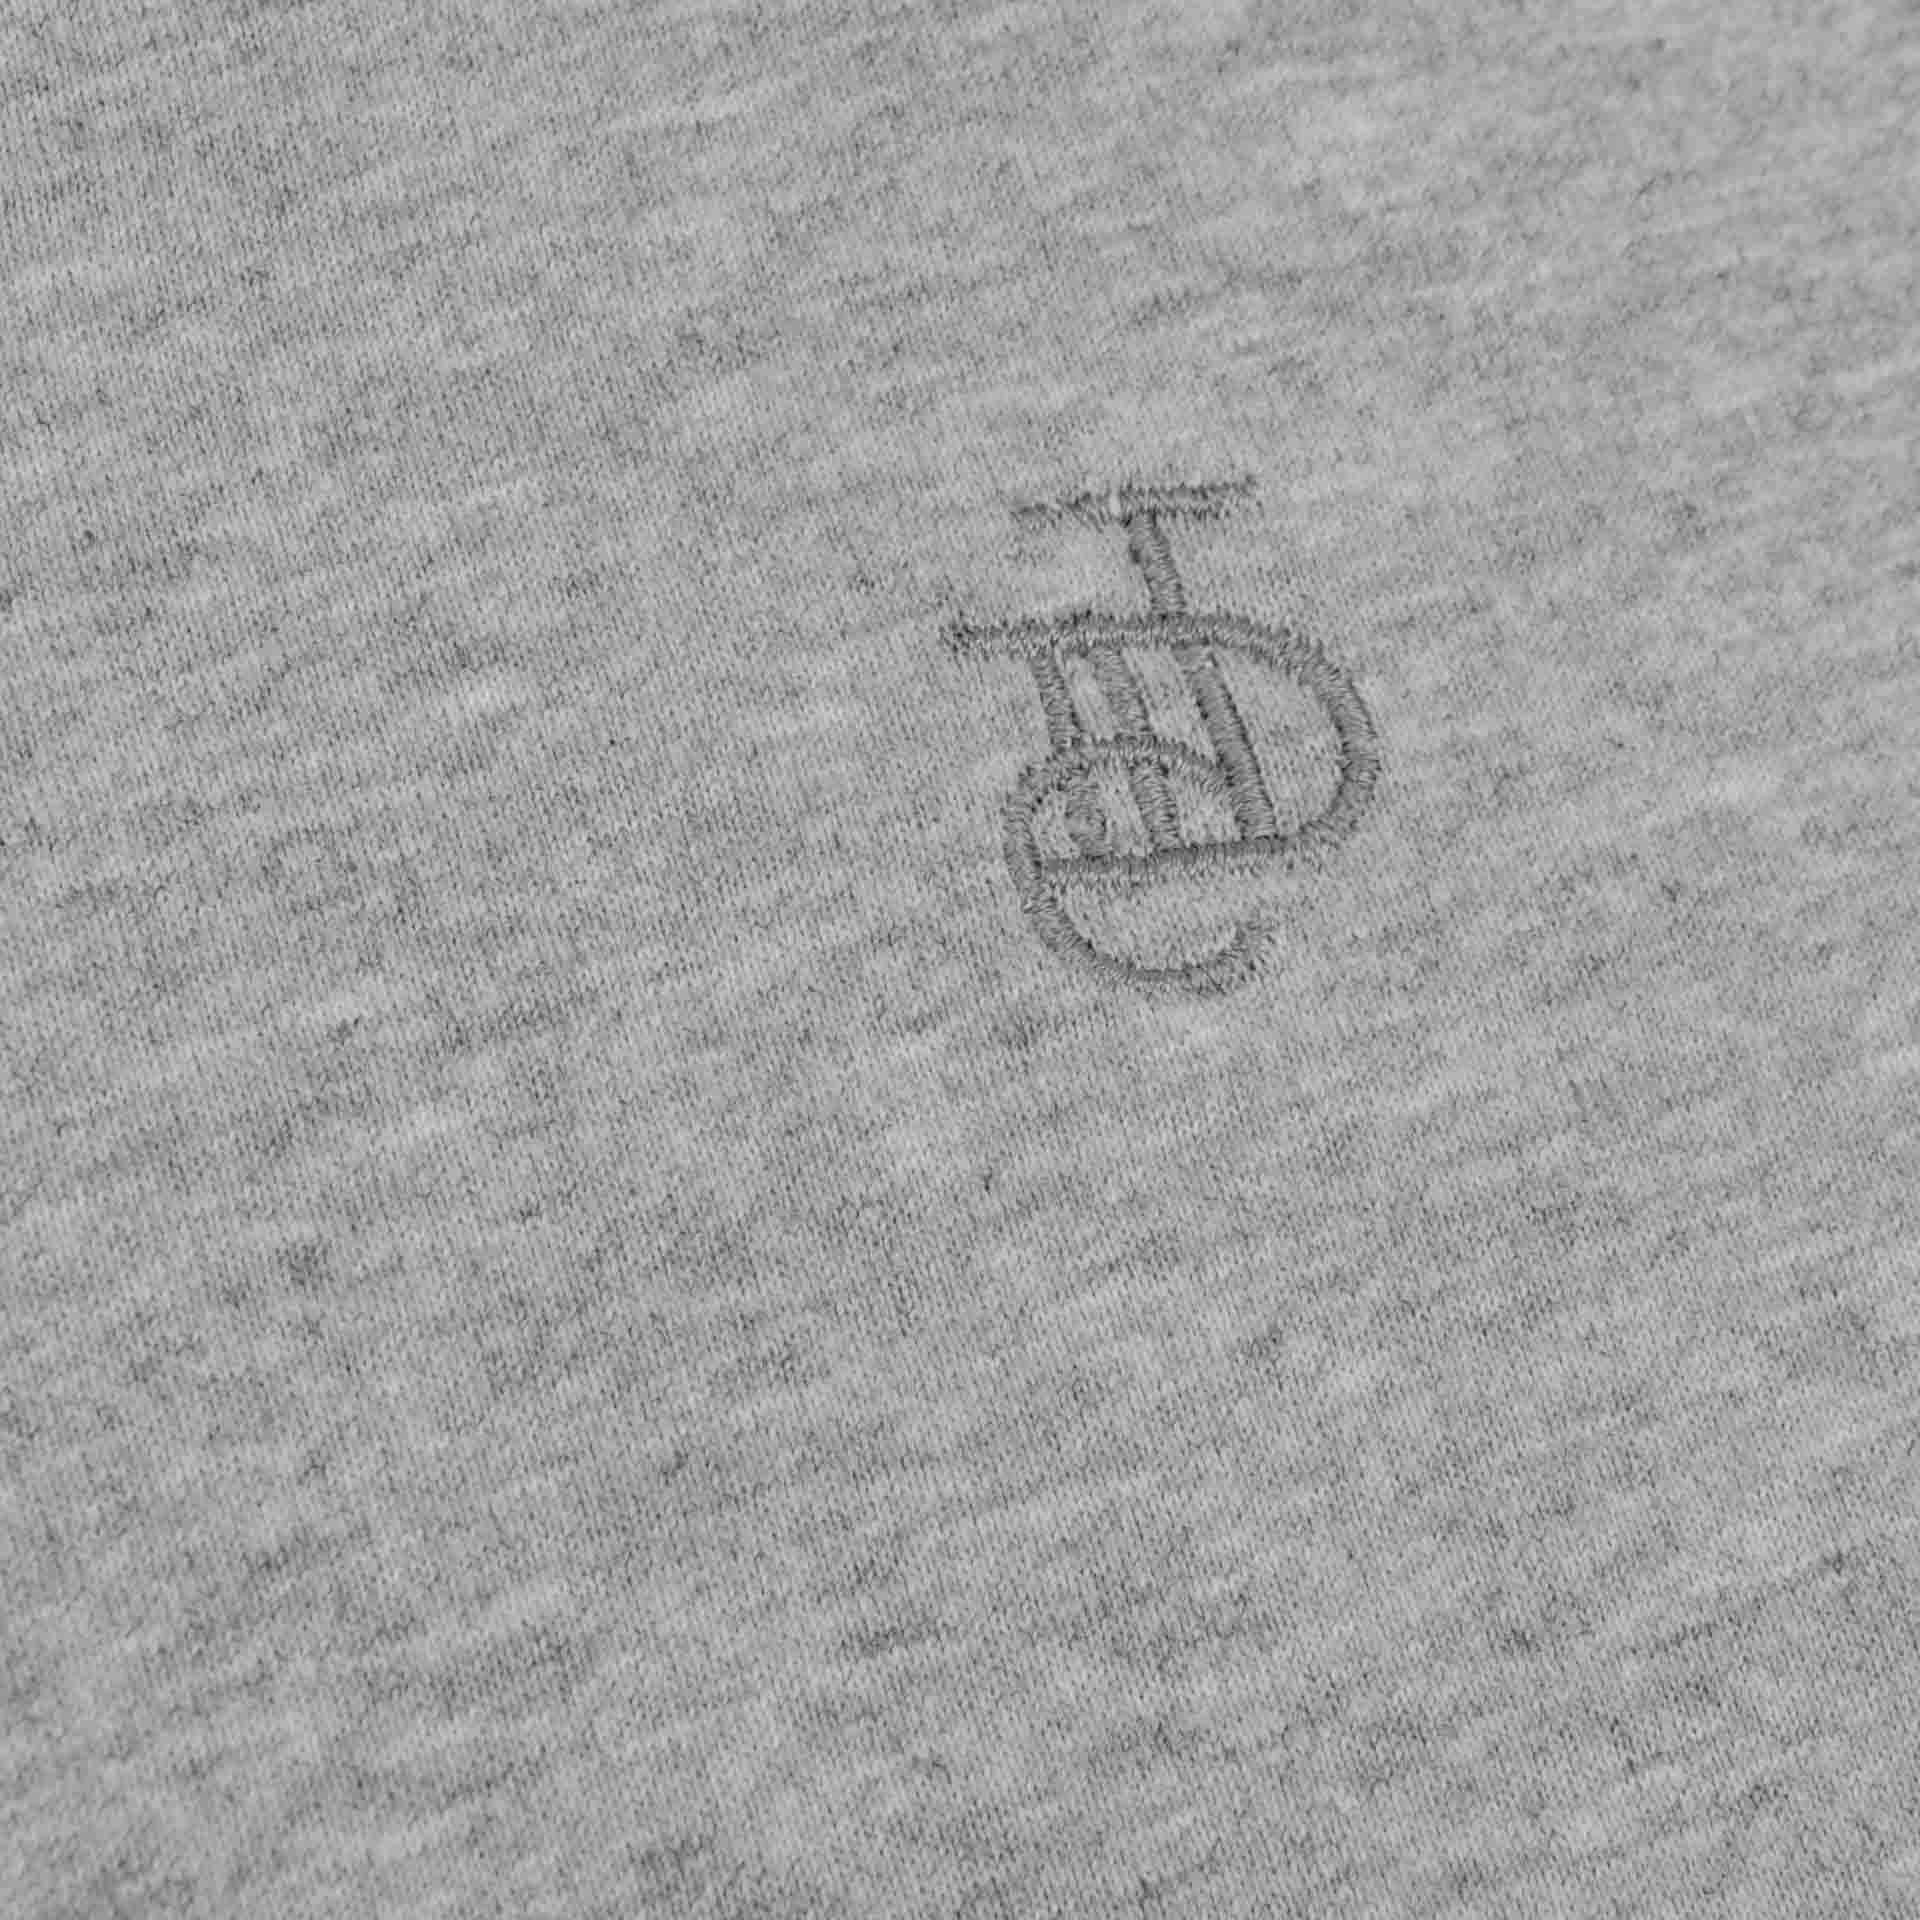 Tiide Classic Logo T-Shirt Grey